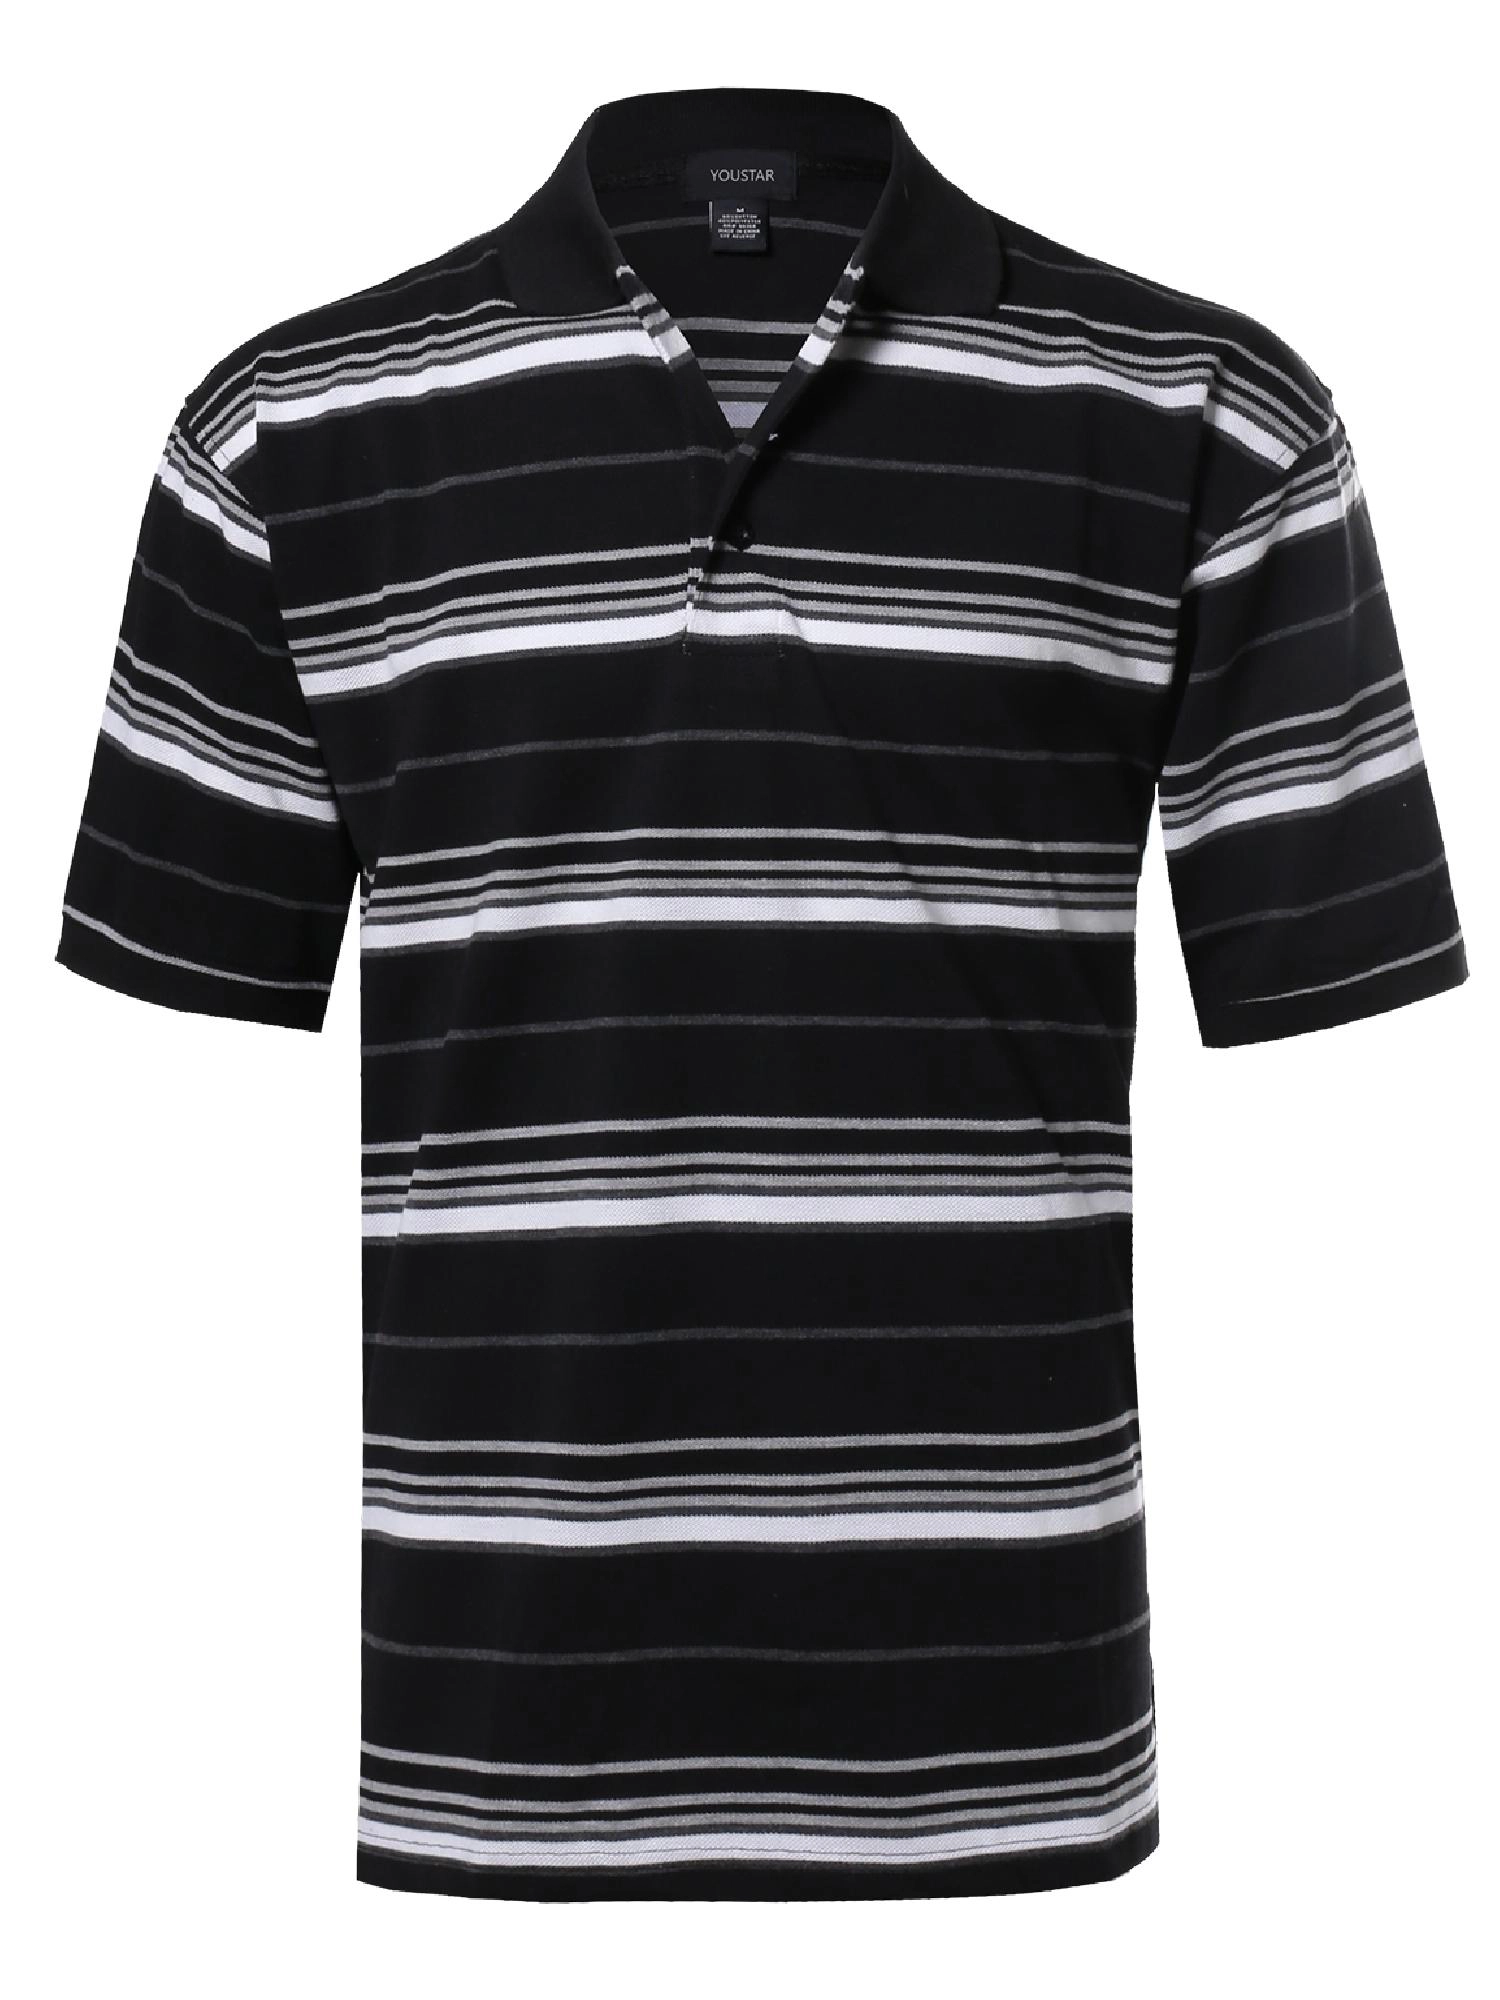 Basic Stripe Casual Polo Shirt from Bangladesh Garments Factory